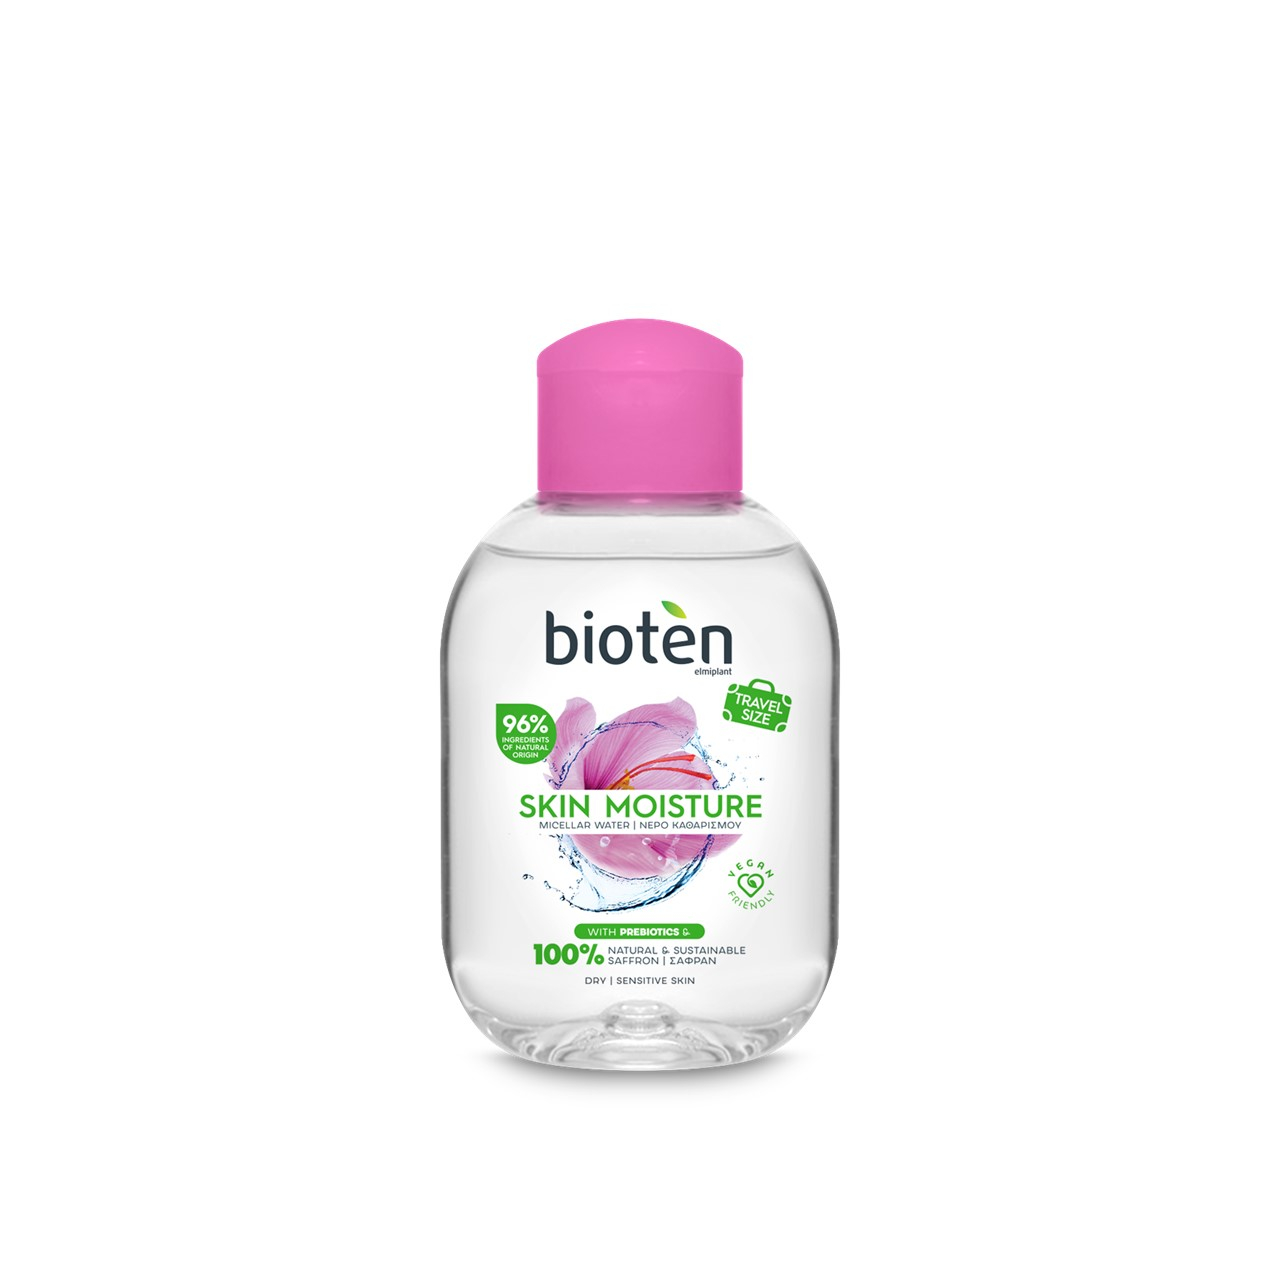 bioten Skin Moisture Micellar Water for Dry/Sensitive Skin 100ml